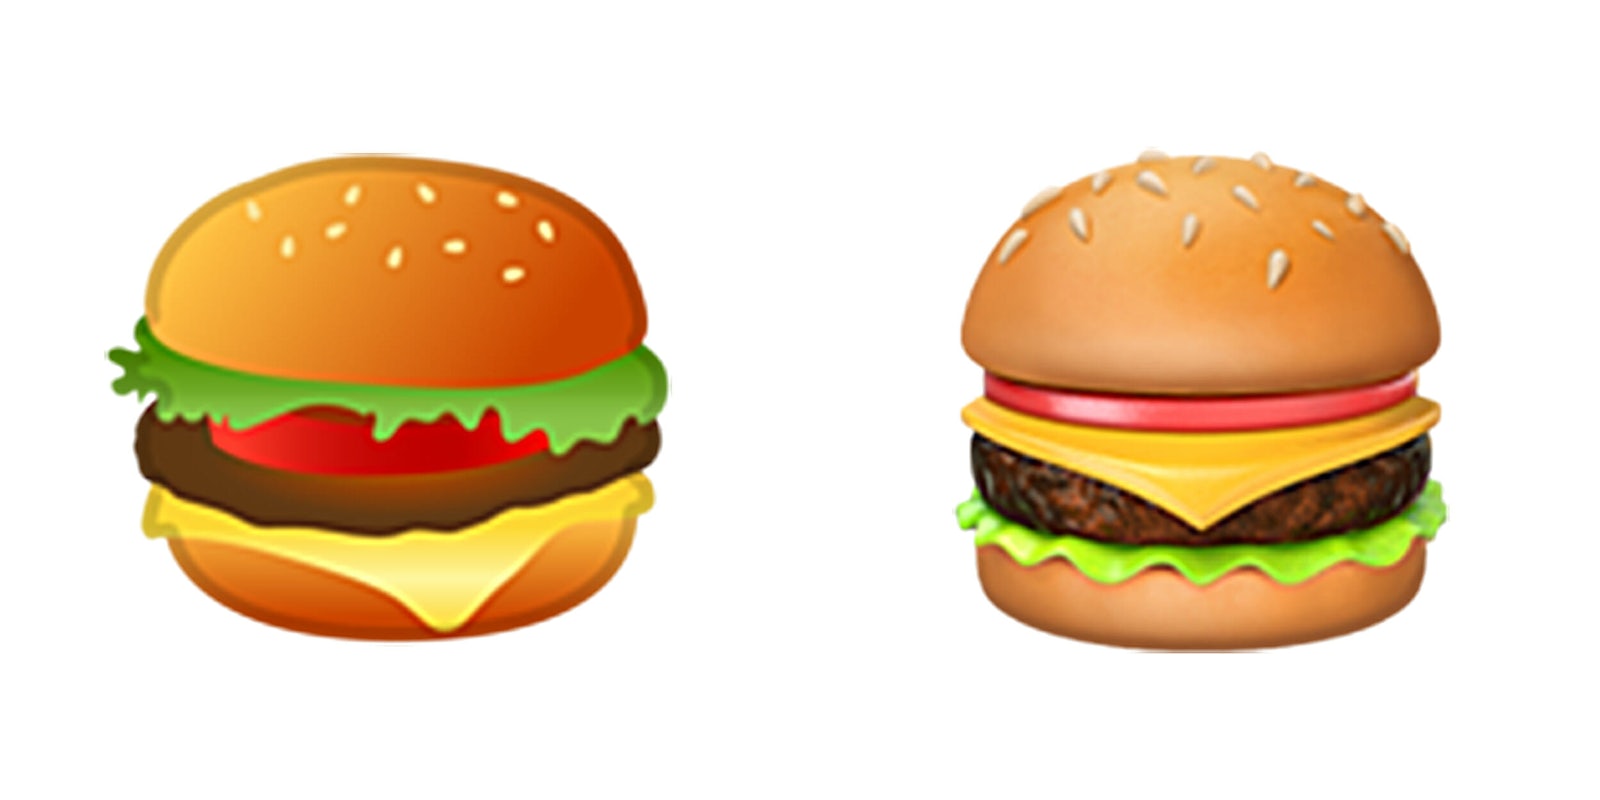 Google and Apple iOS cheeseburger emoji